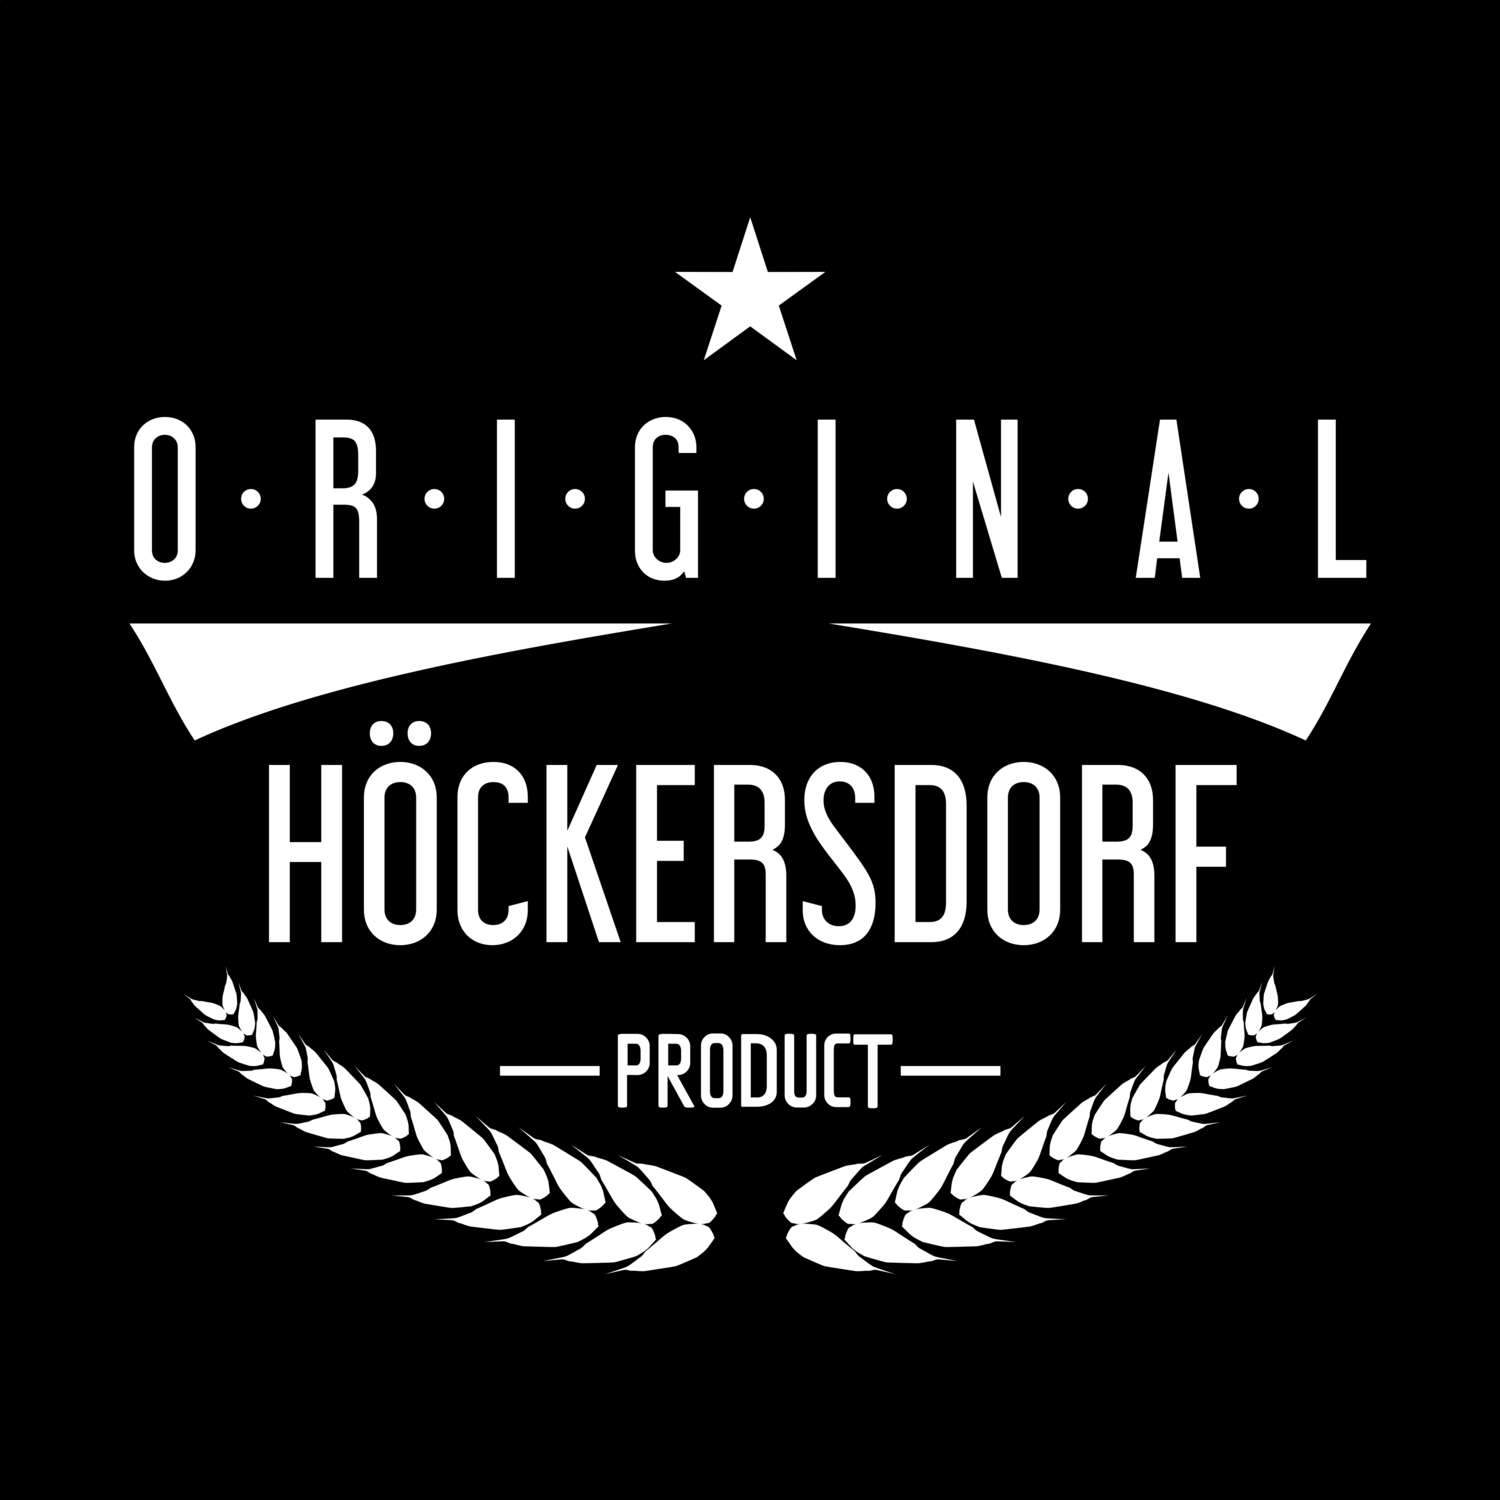 Höckersdorf T-Shirt »Original Product«